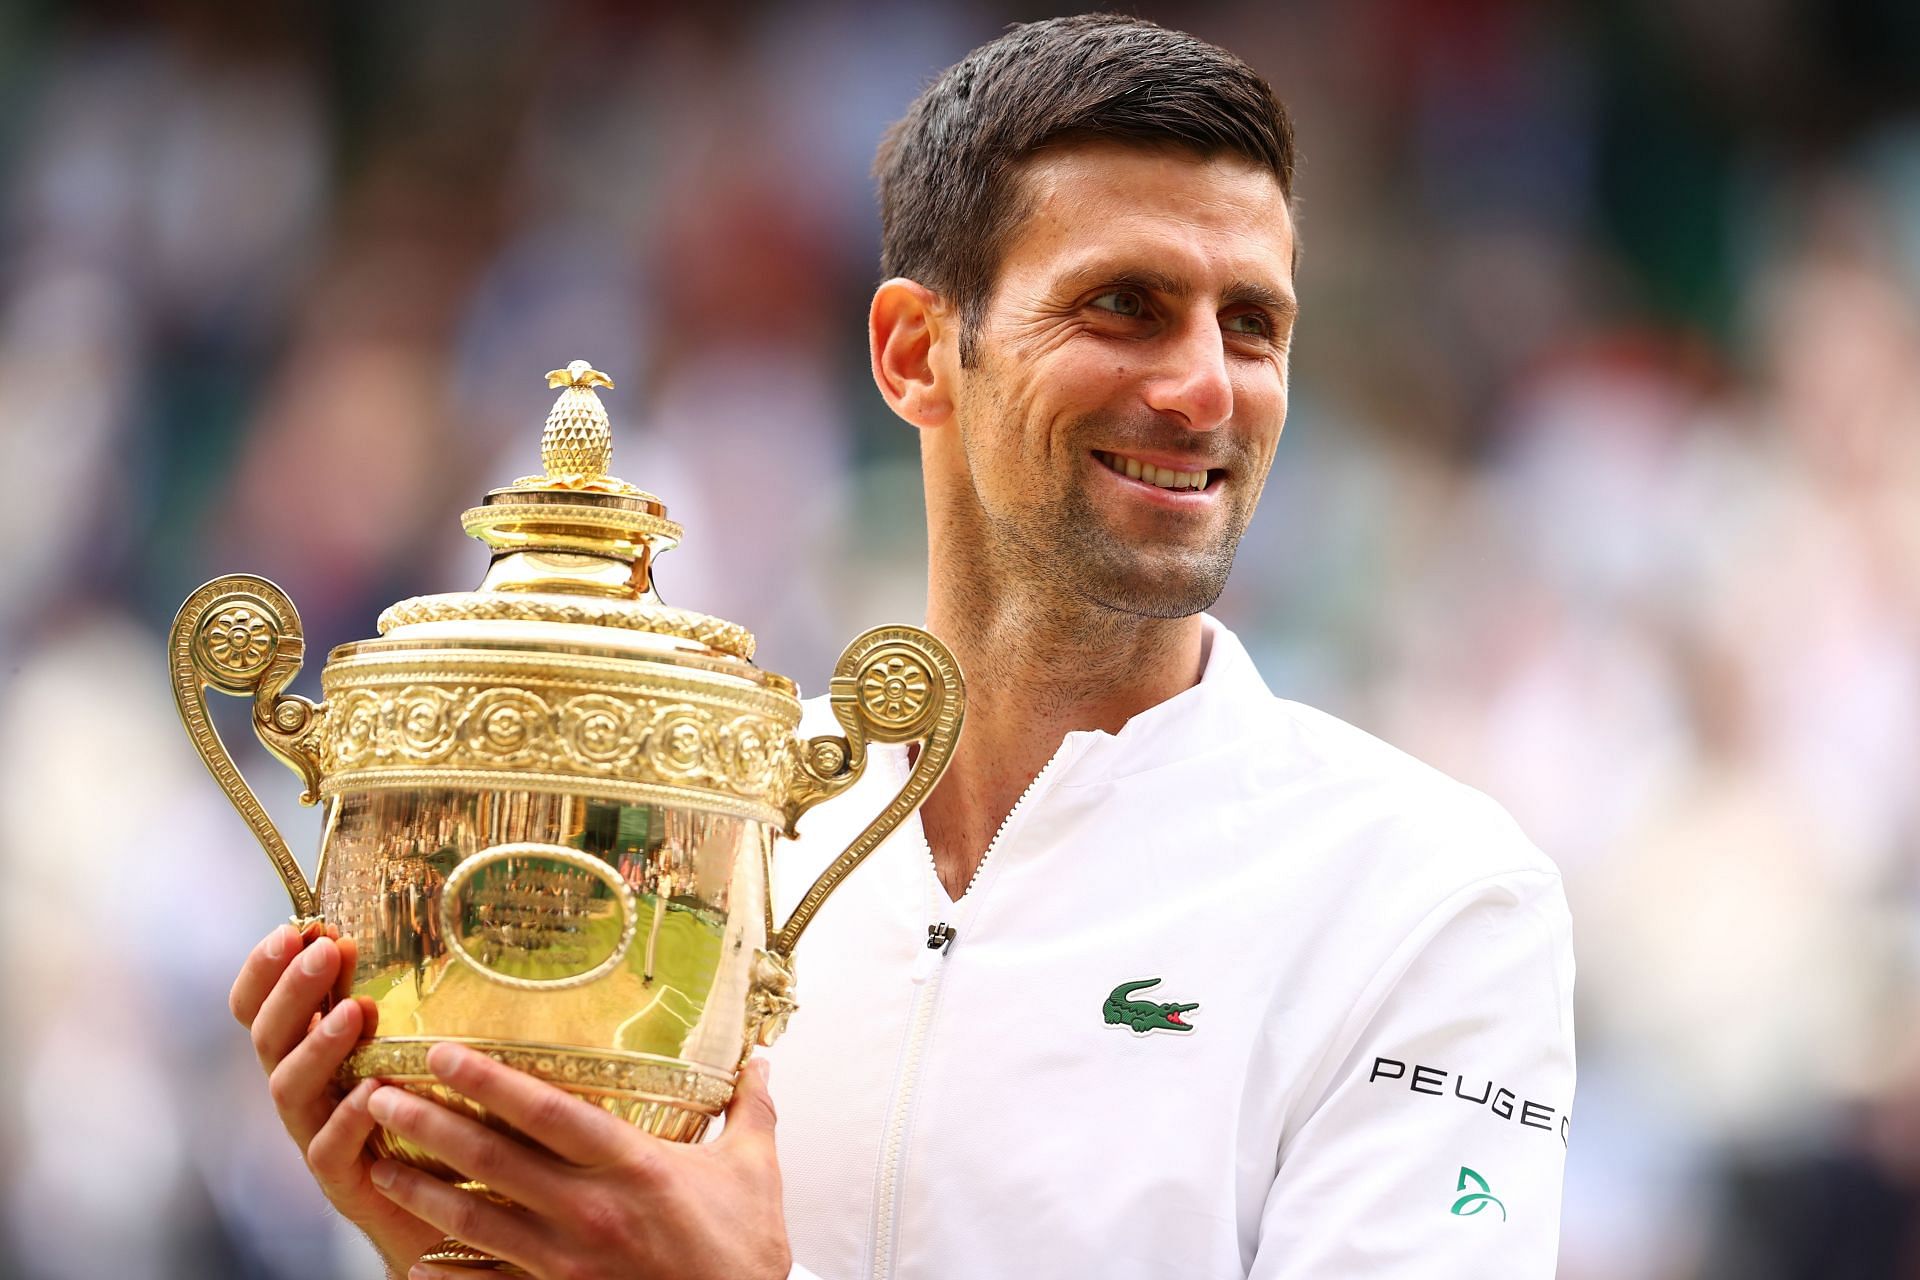 Novak Djokovic has the longest win-streak on Centre Court at Wimbledon at the moment